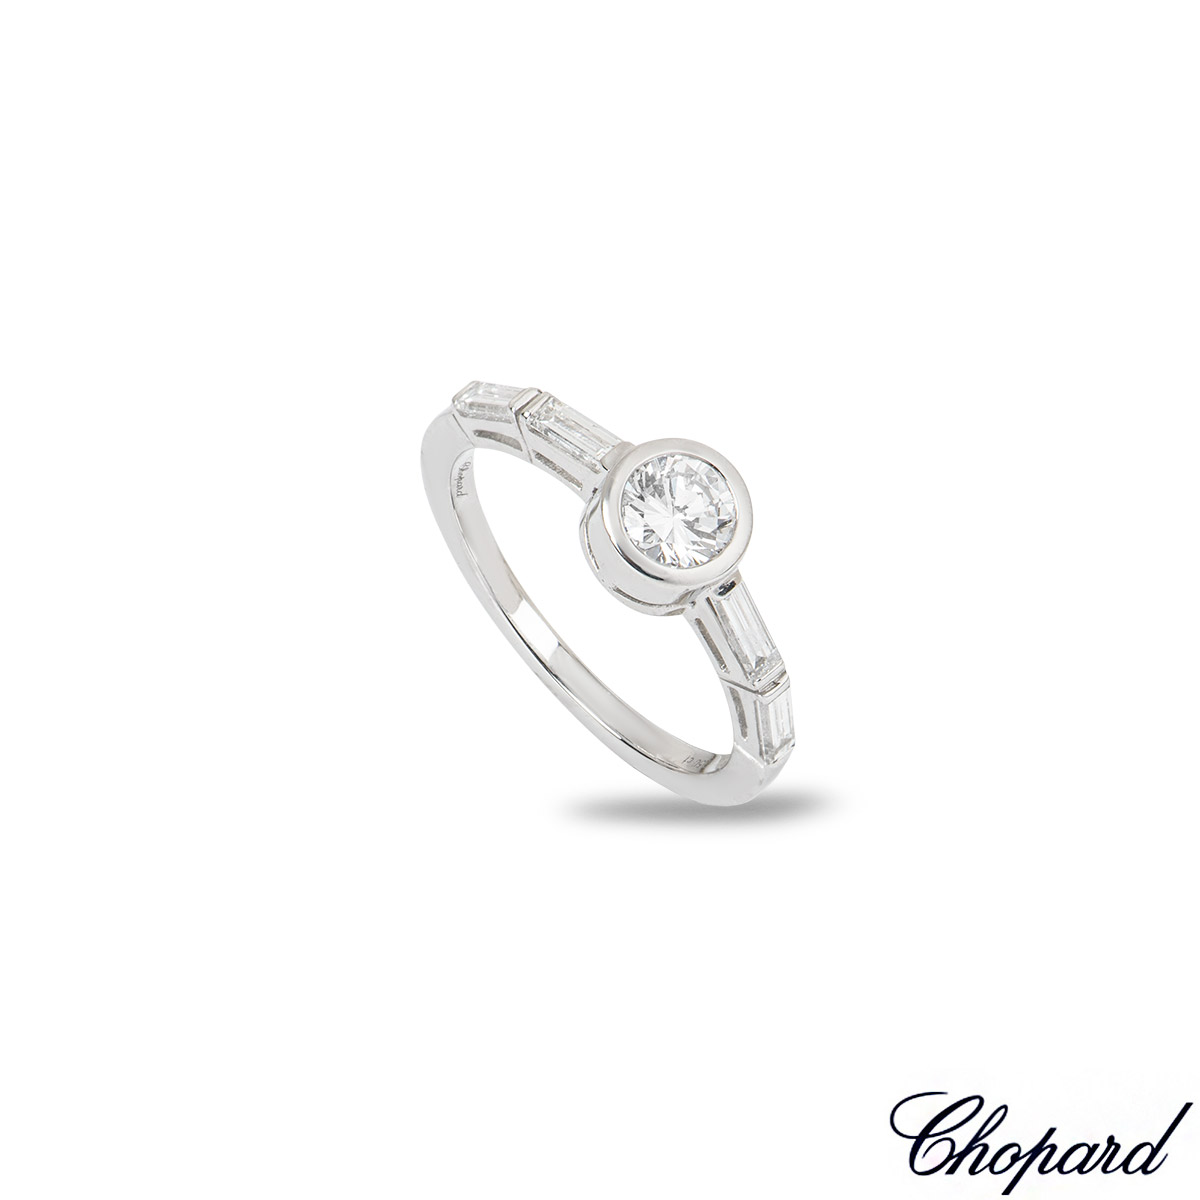 Chopard White Gold Diamond Ring 82/3948-1110